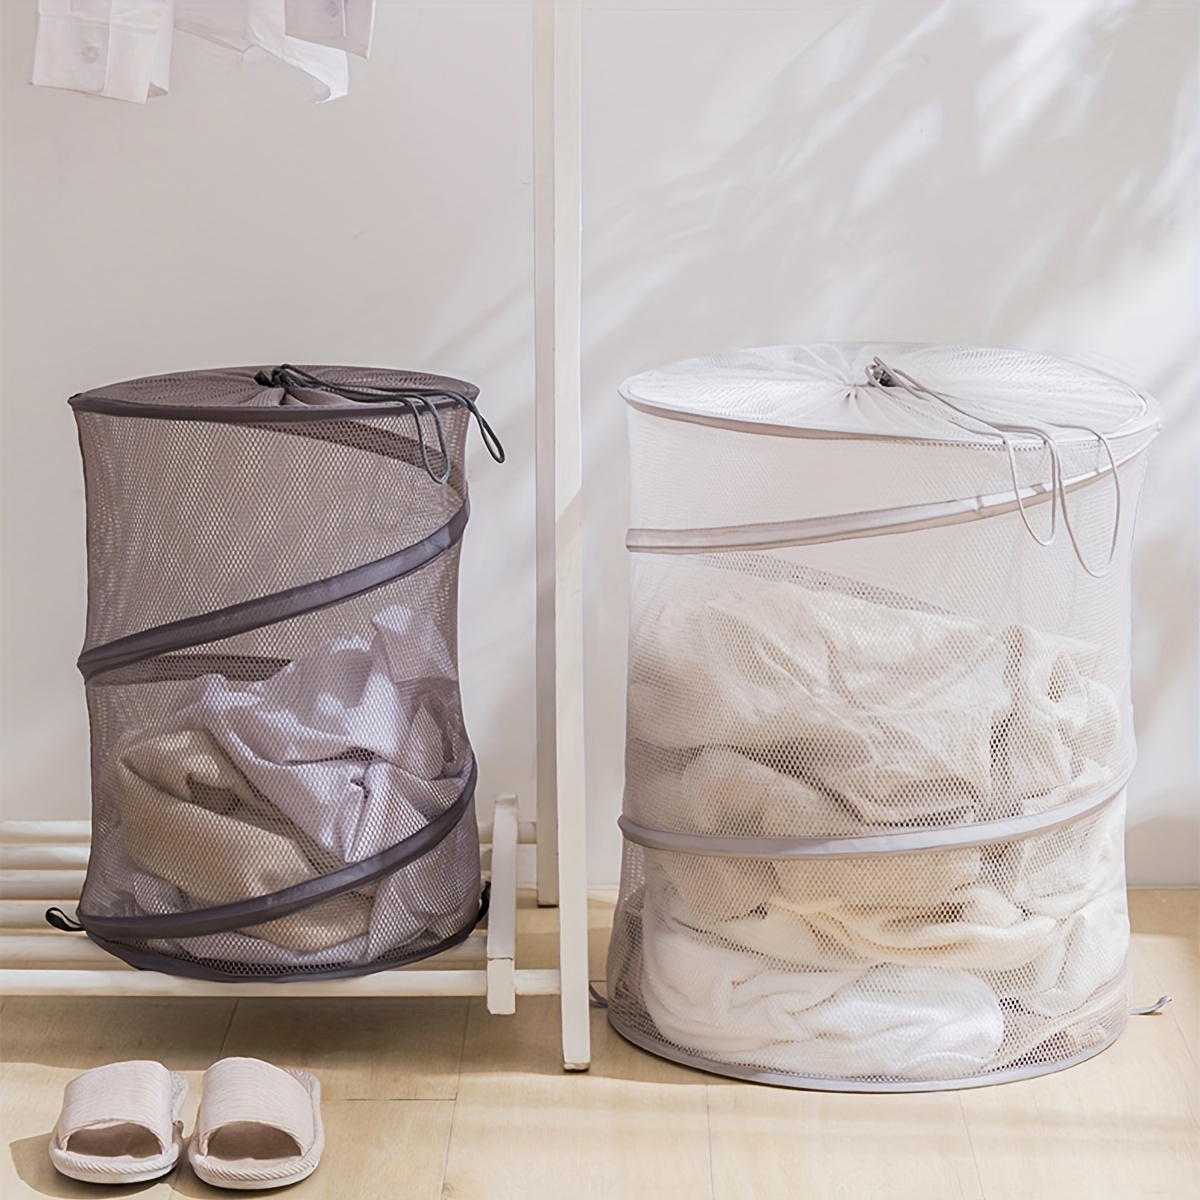 Large Mesh Pop-Up Laundry Basket, Collapsible Laundry Hamper